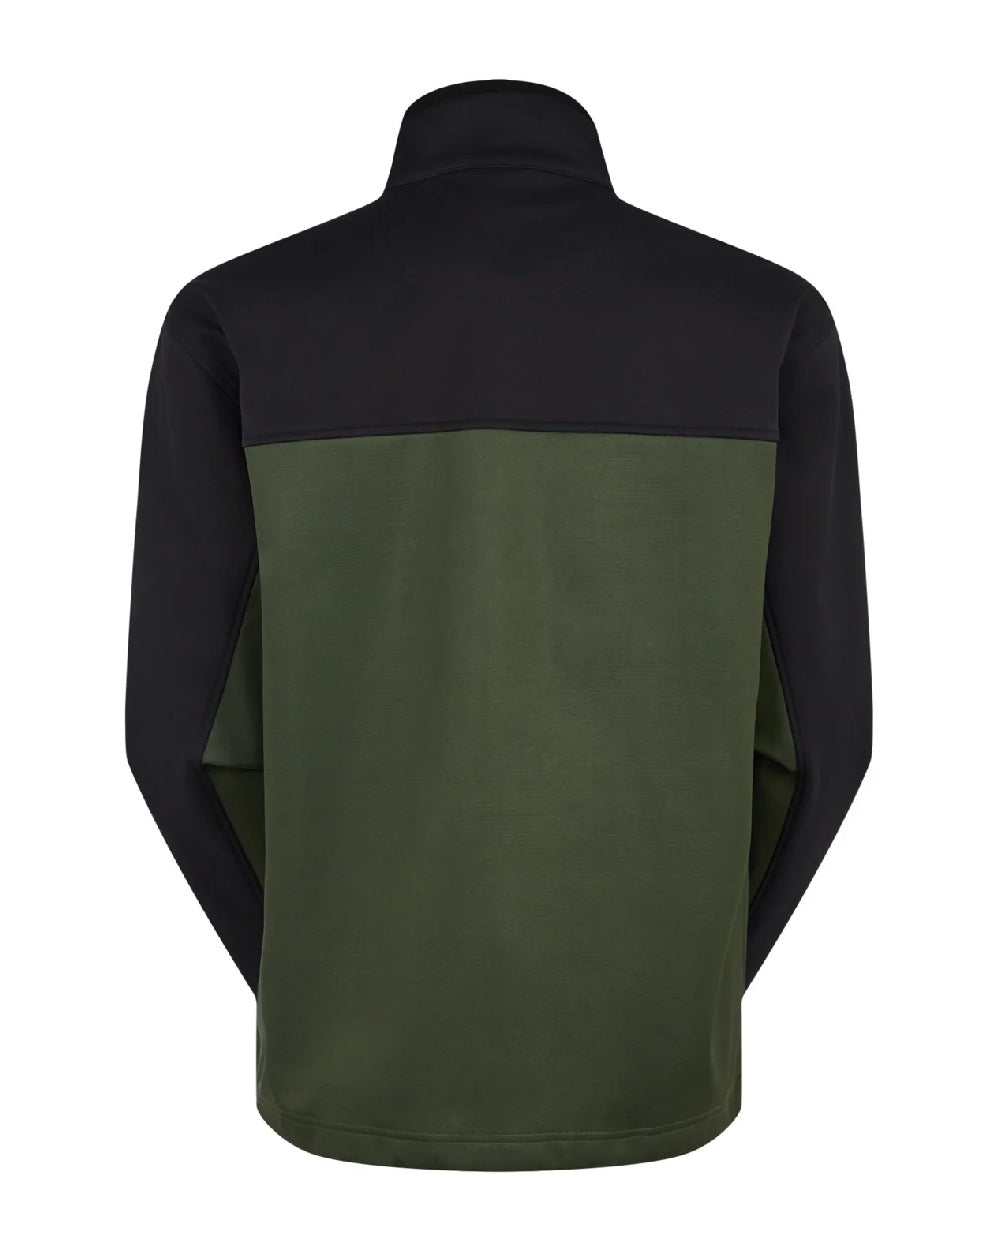 Ridgeline Ranger Softshell Jacket in Olive/Black